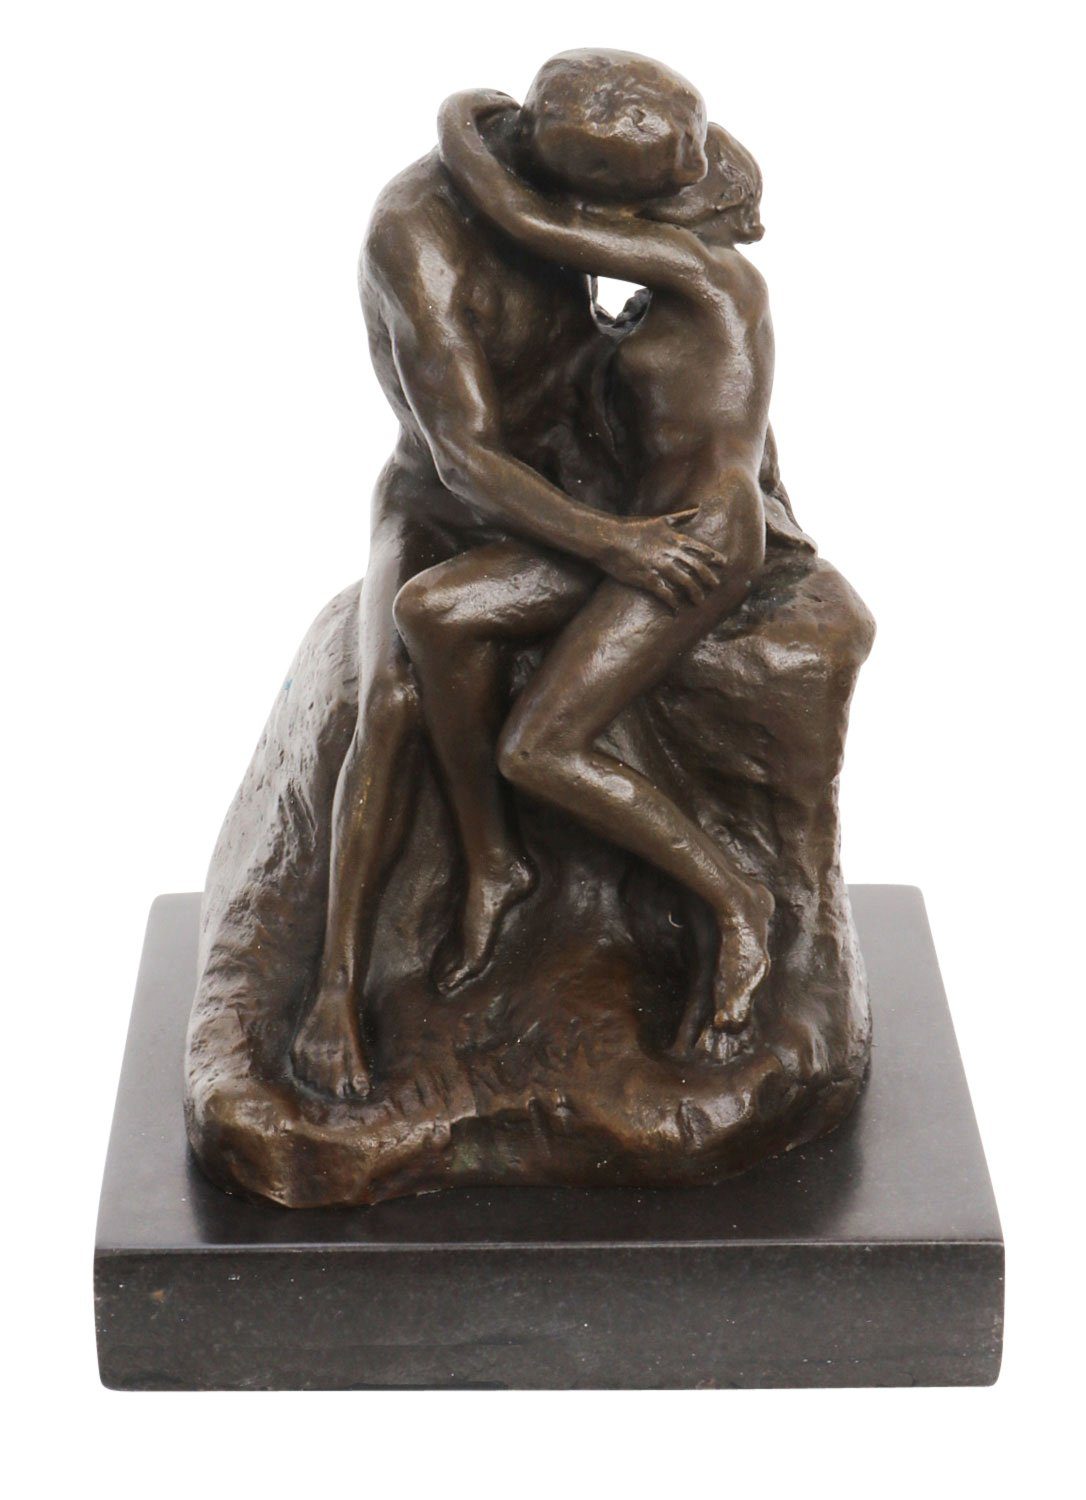 Aubaho Liebespaar Kuss Rep Skulptur Skulptur Rodin nach Bronze Bronzeskulptur 14cm der